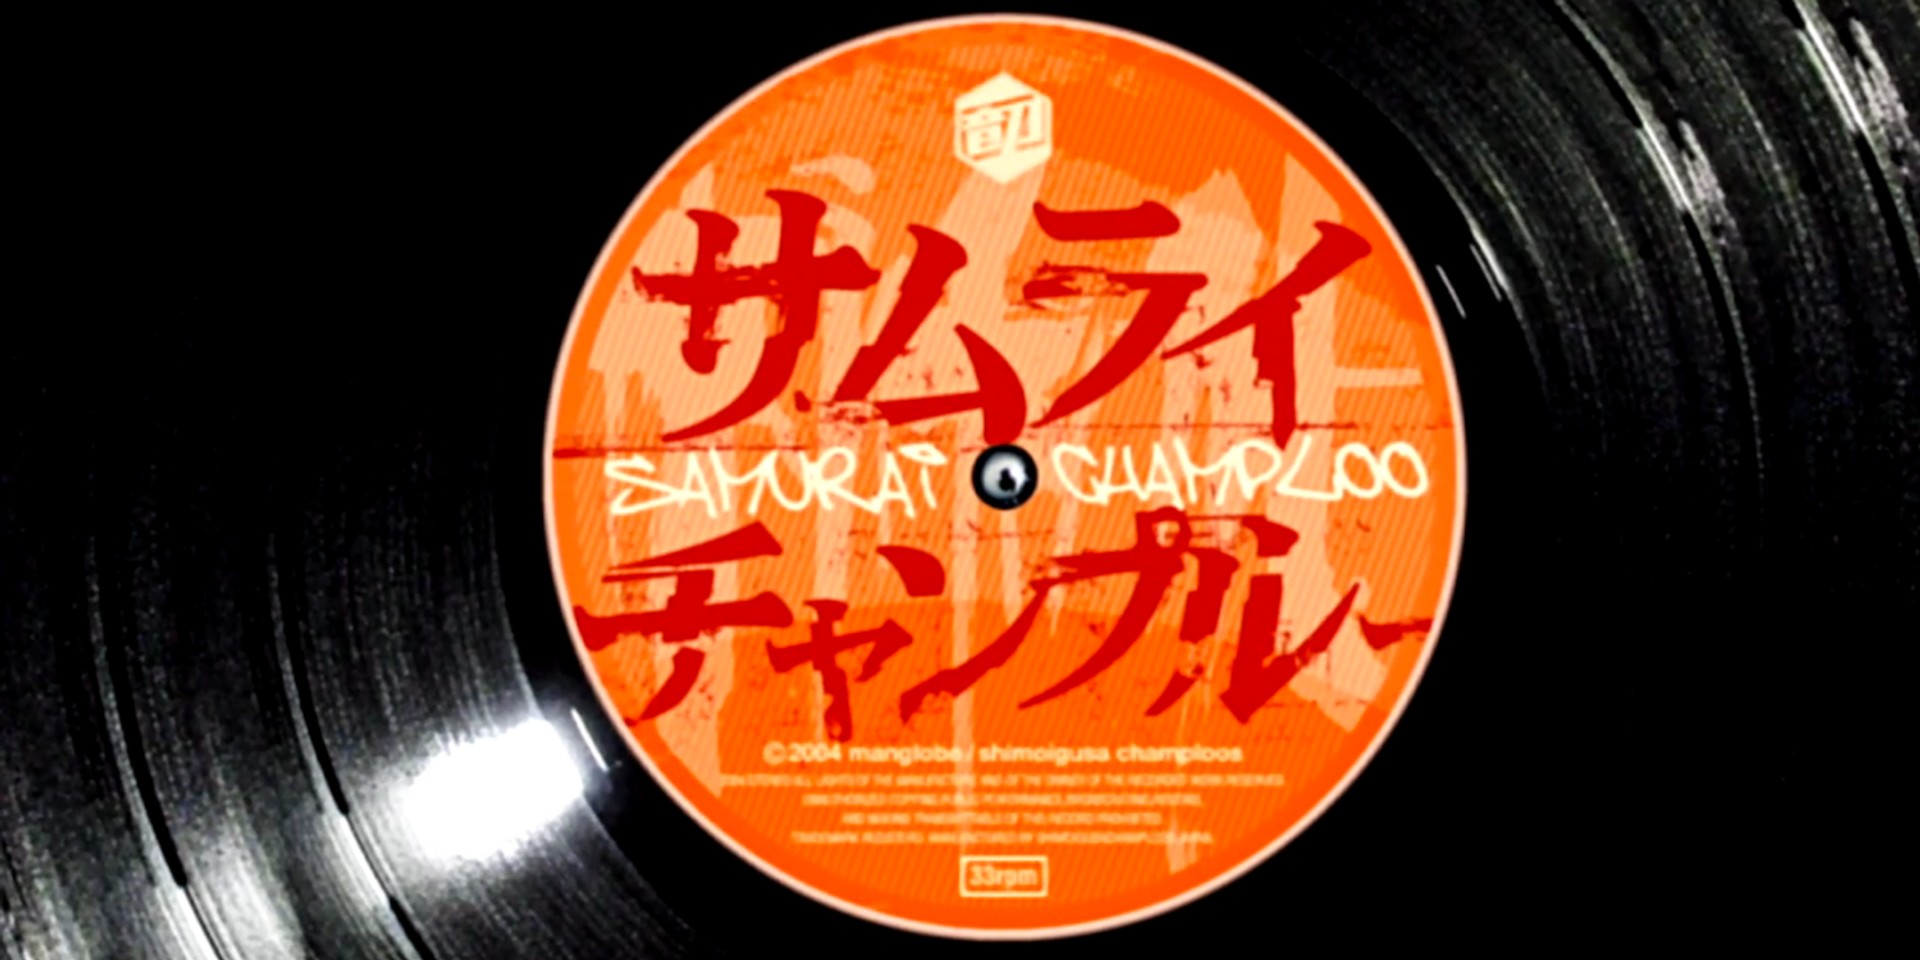 Essentials: Nujabes & Fat Jon's Samurai Champloo Music Record -